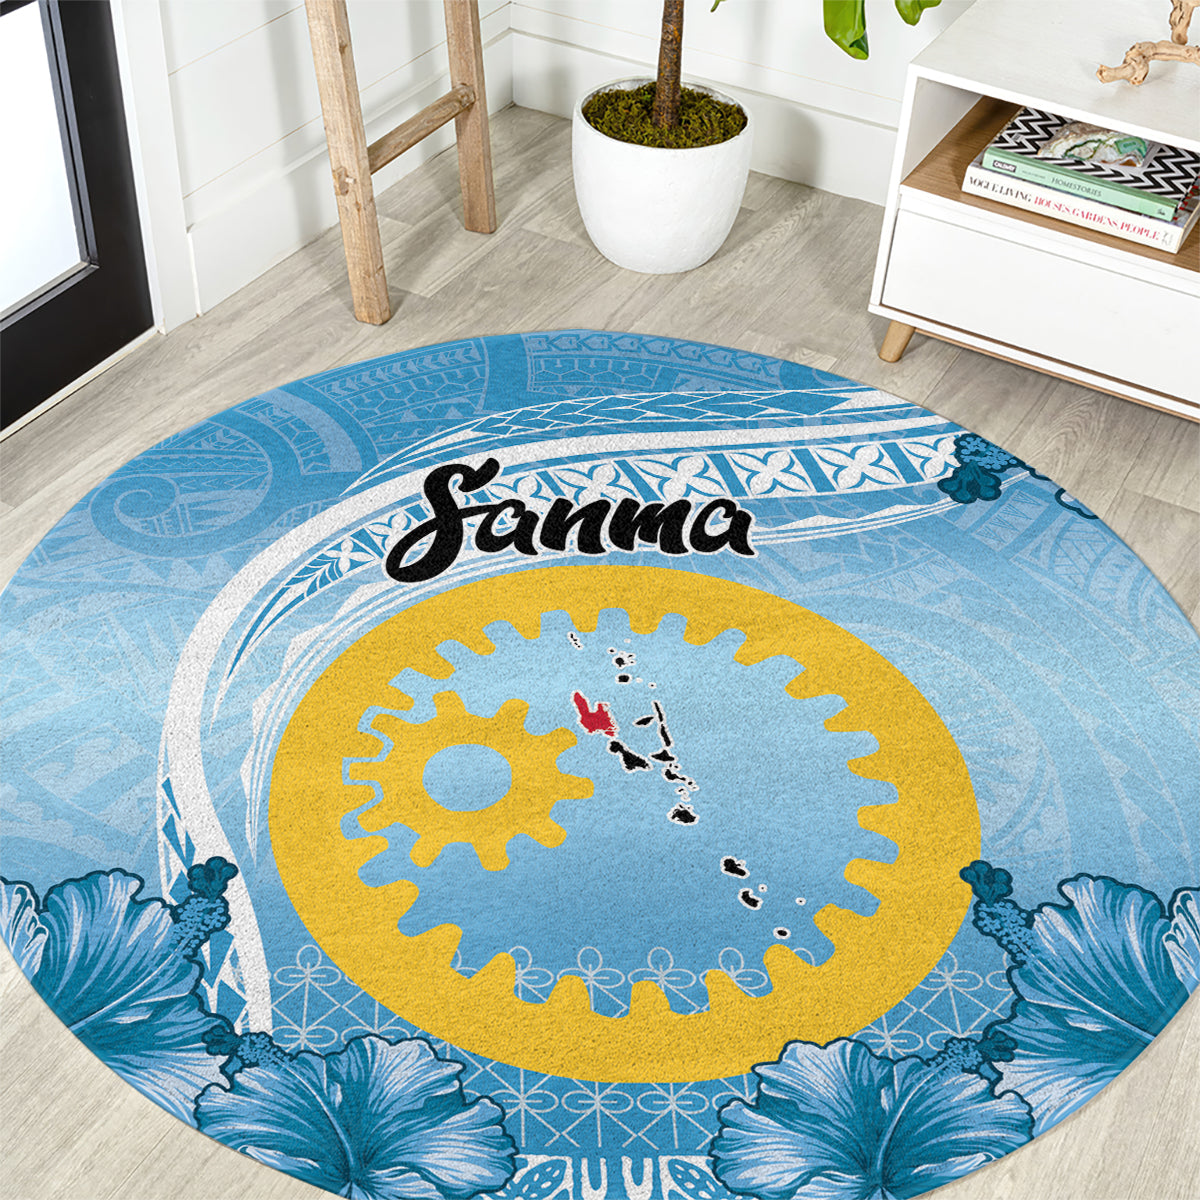 Sanma Vanuatu Round Carpet Hibiscus Sand Drawing with Pacific Pattern